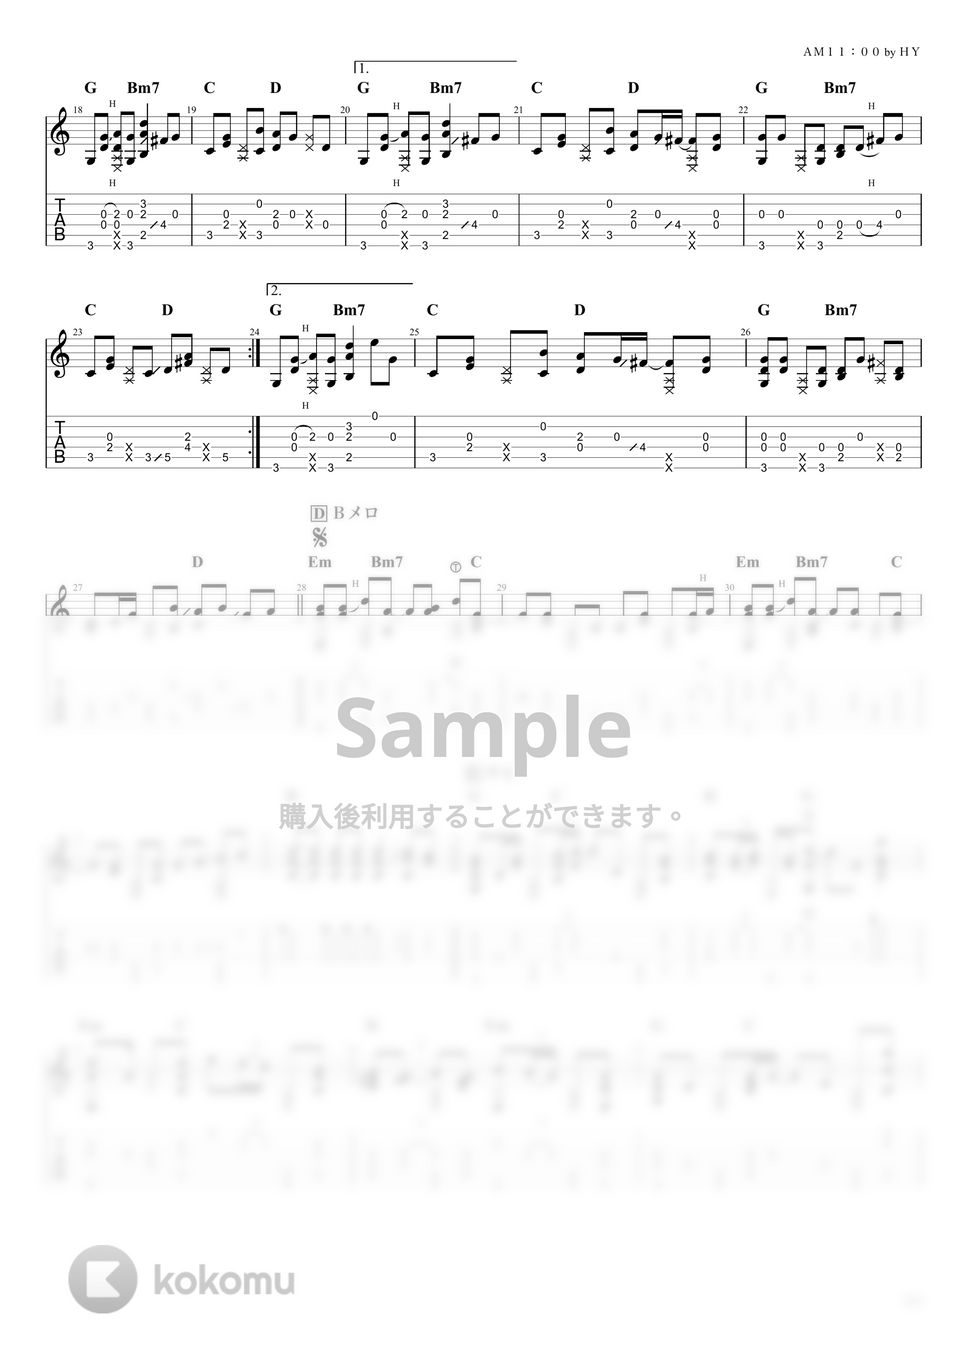 HY - AM11:00 (ソロギター) by たまごどり